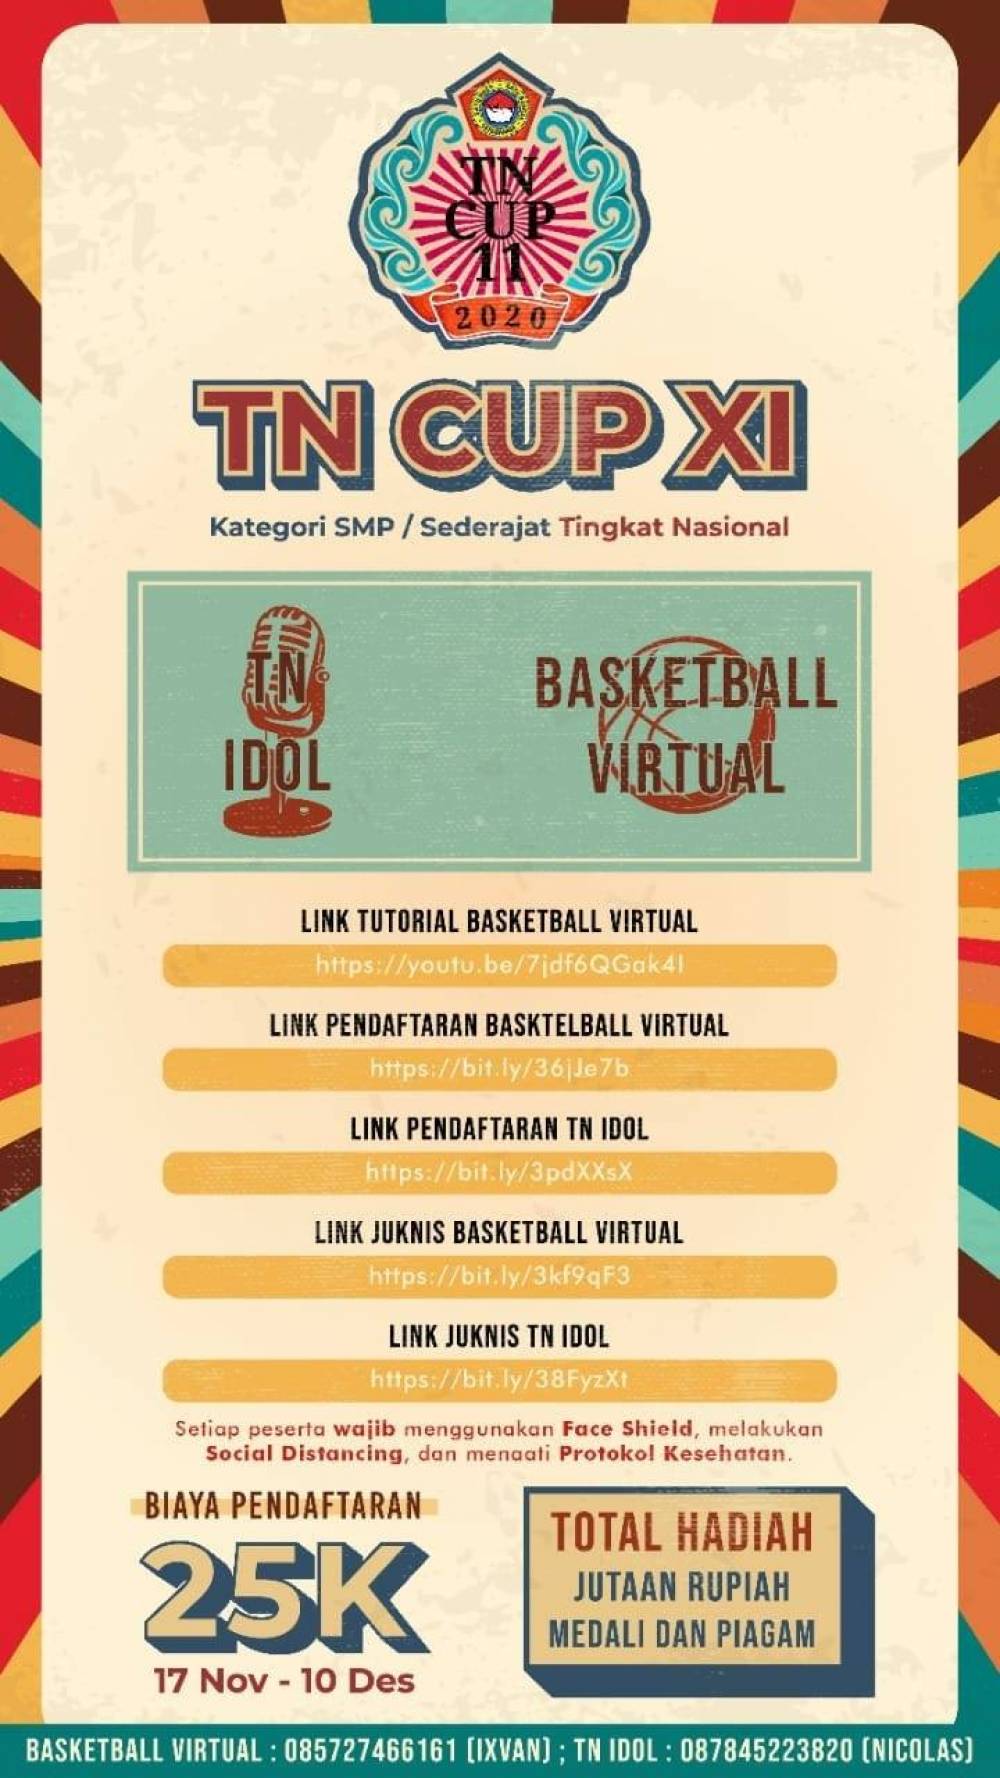 Lomba TN Cup XI virtual untuk SMP sederajat [Pengumuman Finalis]